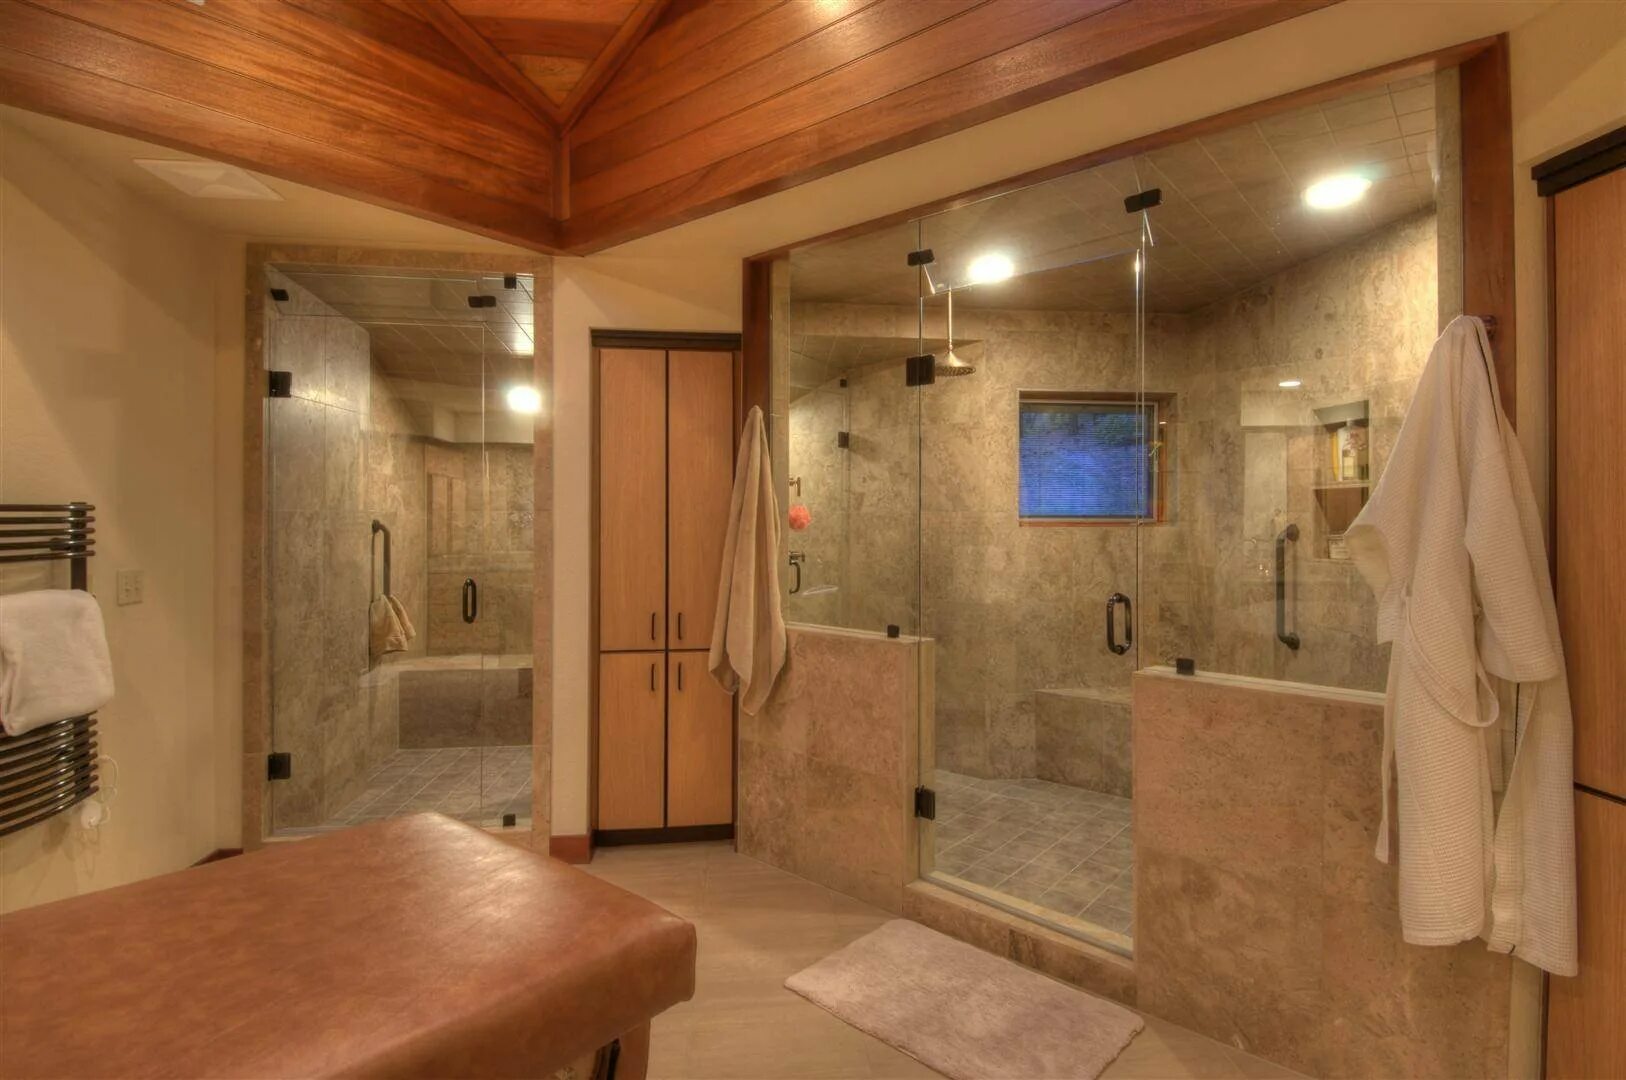 Видео баня душевая. Ванная комната с сауной. Ванная комната с сауной и душем. Душевая комната с сауной.